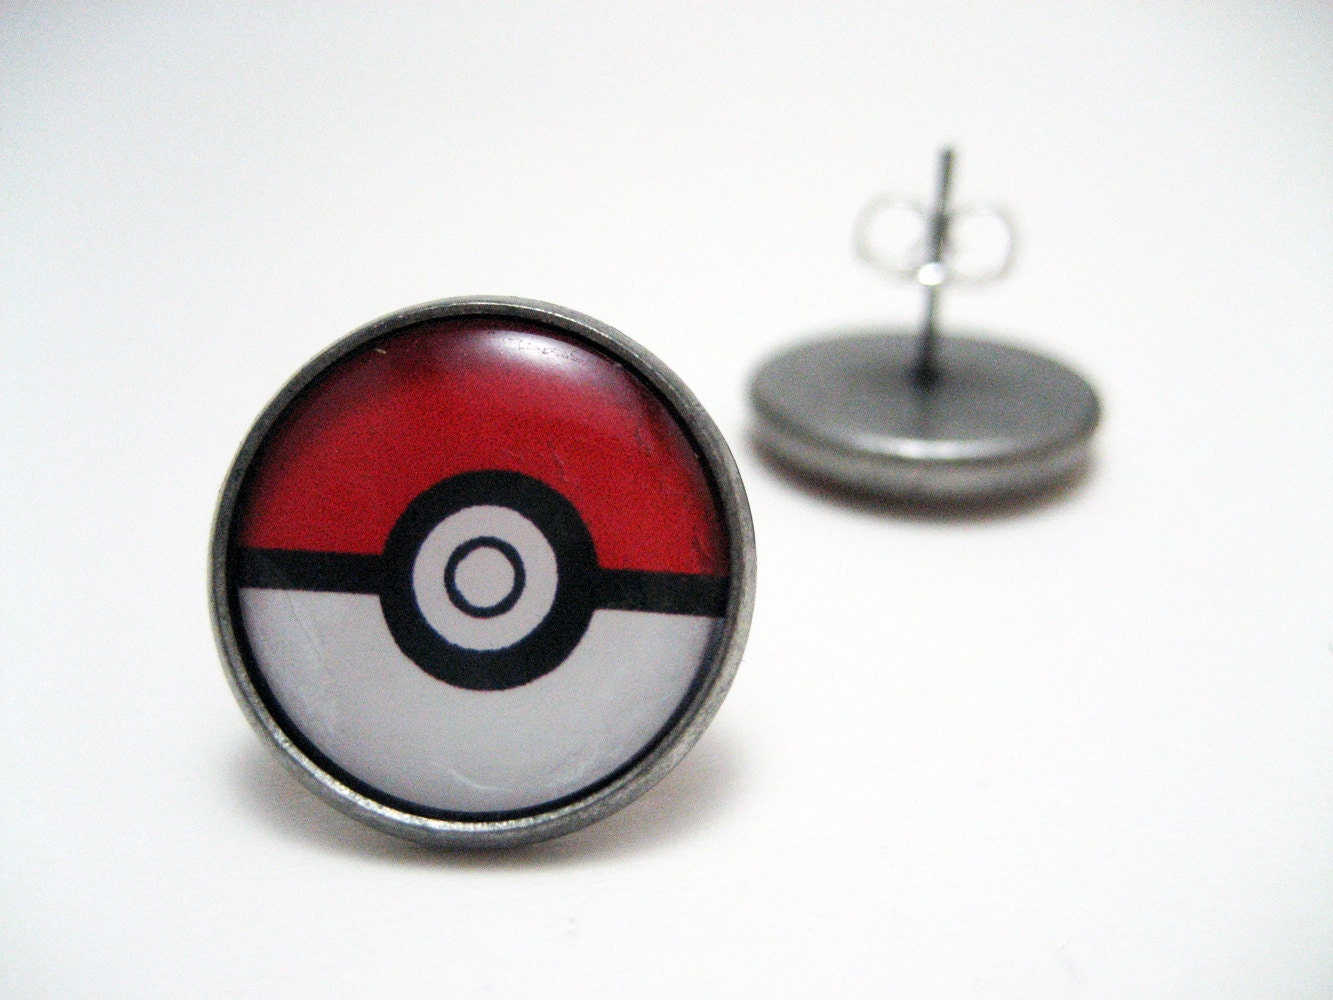 Pokemon Pokeball Studs - Red and white pokemaster pokeball post earrings LARGE - Geekery Geek Chic Gamer